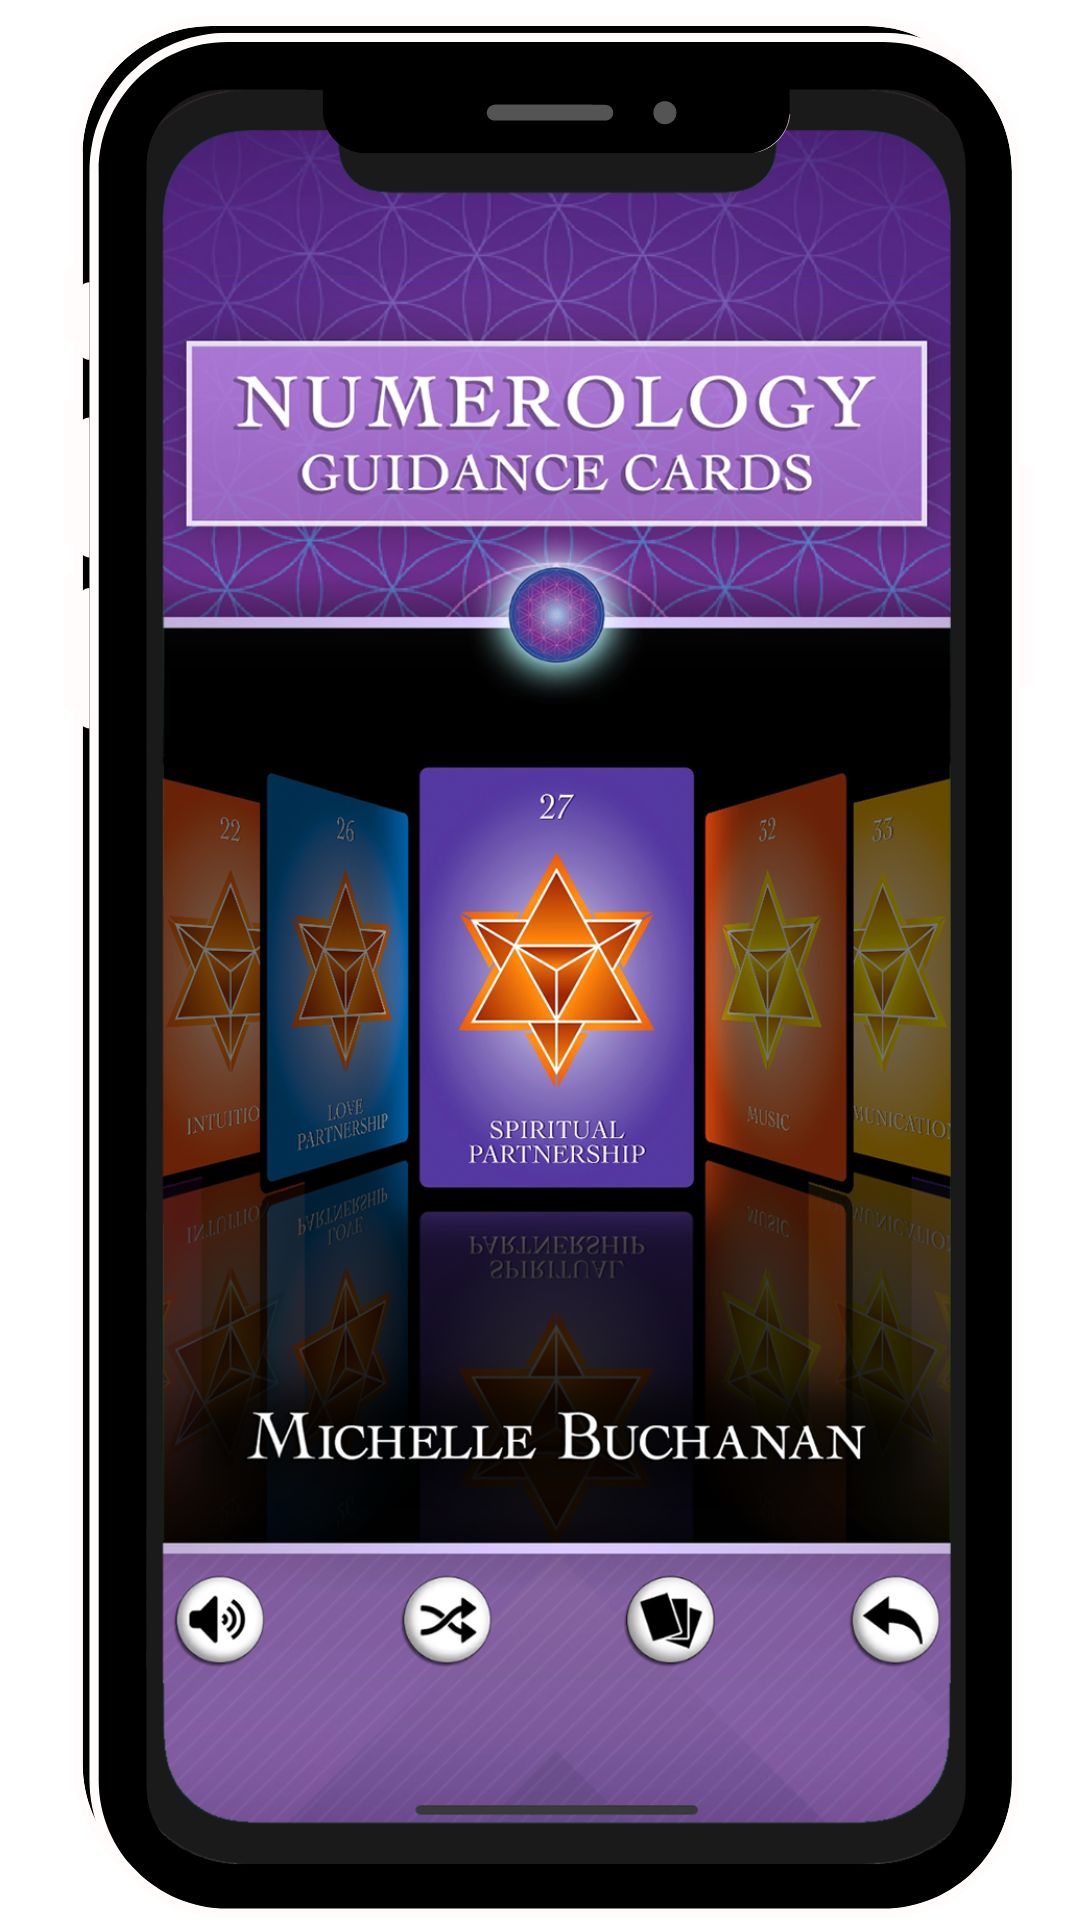 Numerology Guidance Oracle App by Michelle Buchanan